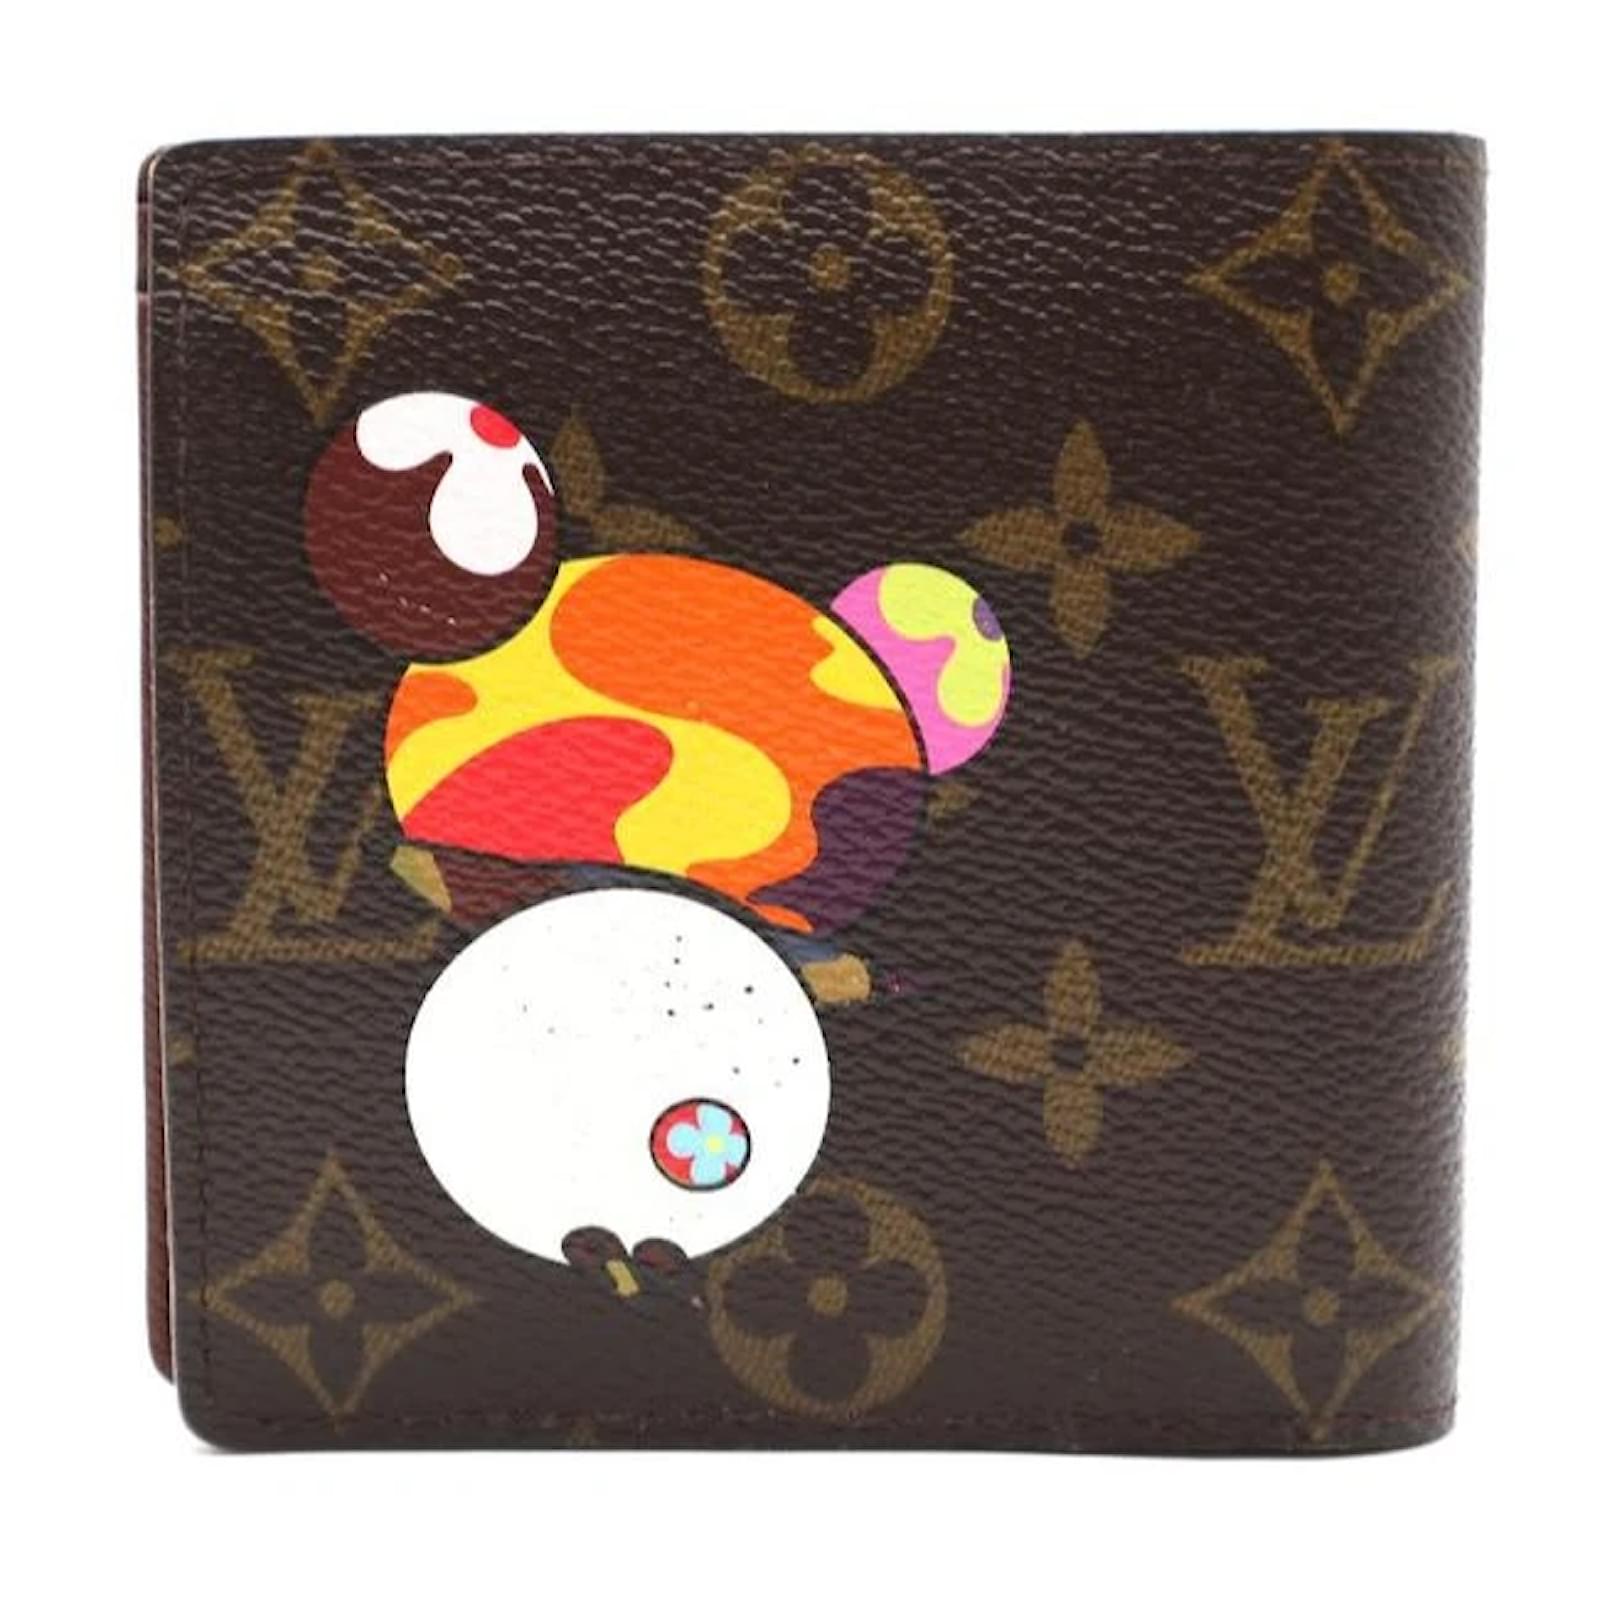 Louis Vuitton Murakami Wallet